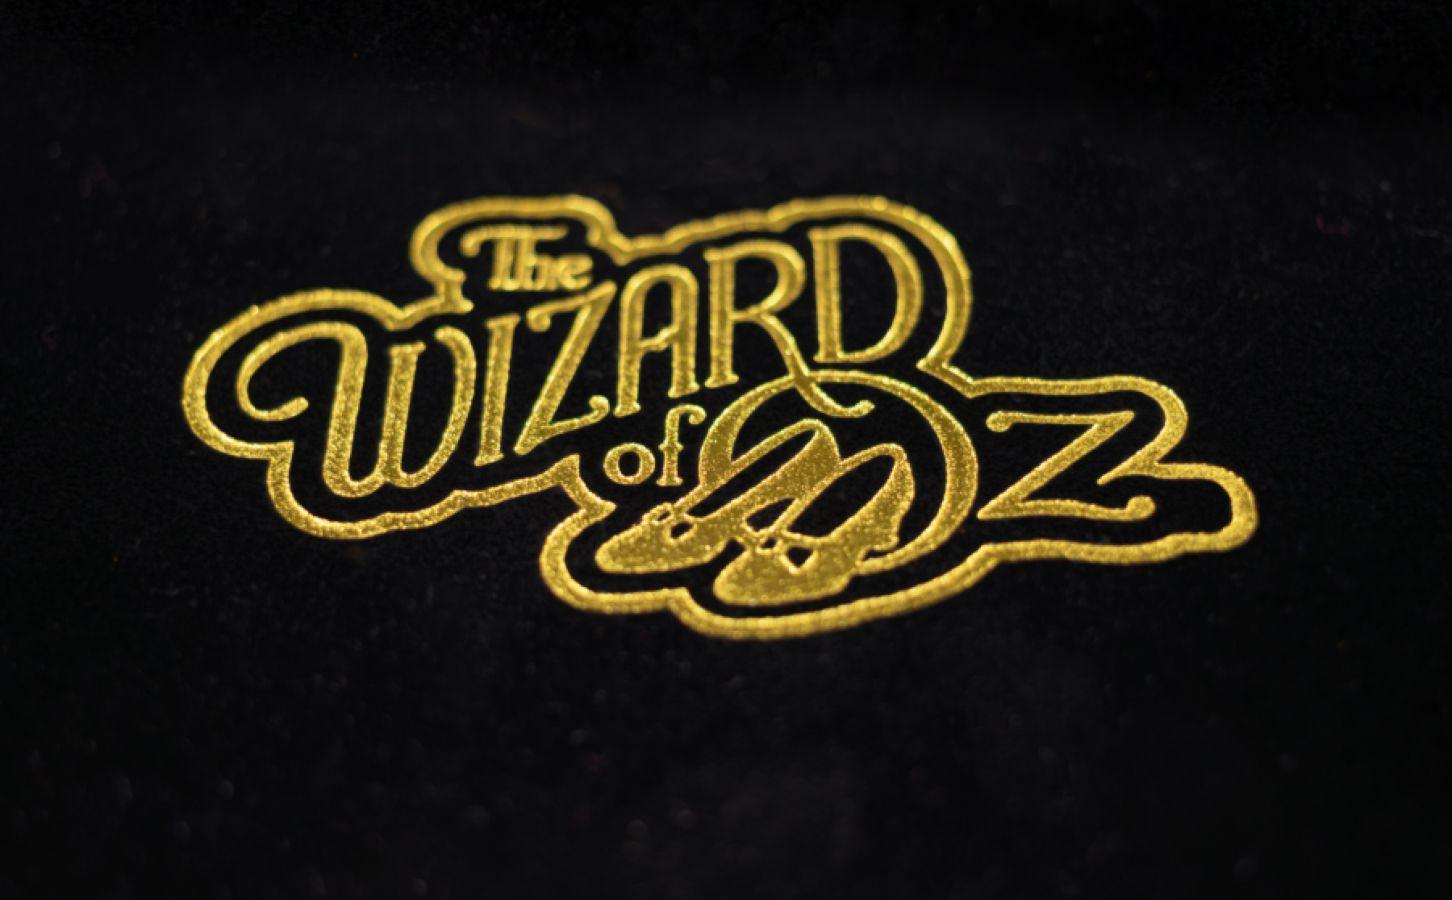 IKO1739 Wizard of Oz - Courage Medal Limited Edition Replica - Ikon Design Studio - Titan Pop Culture